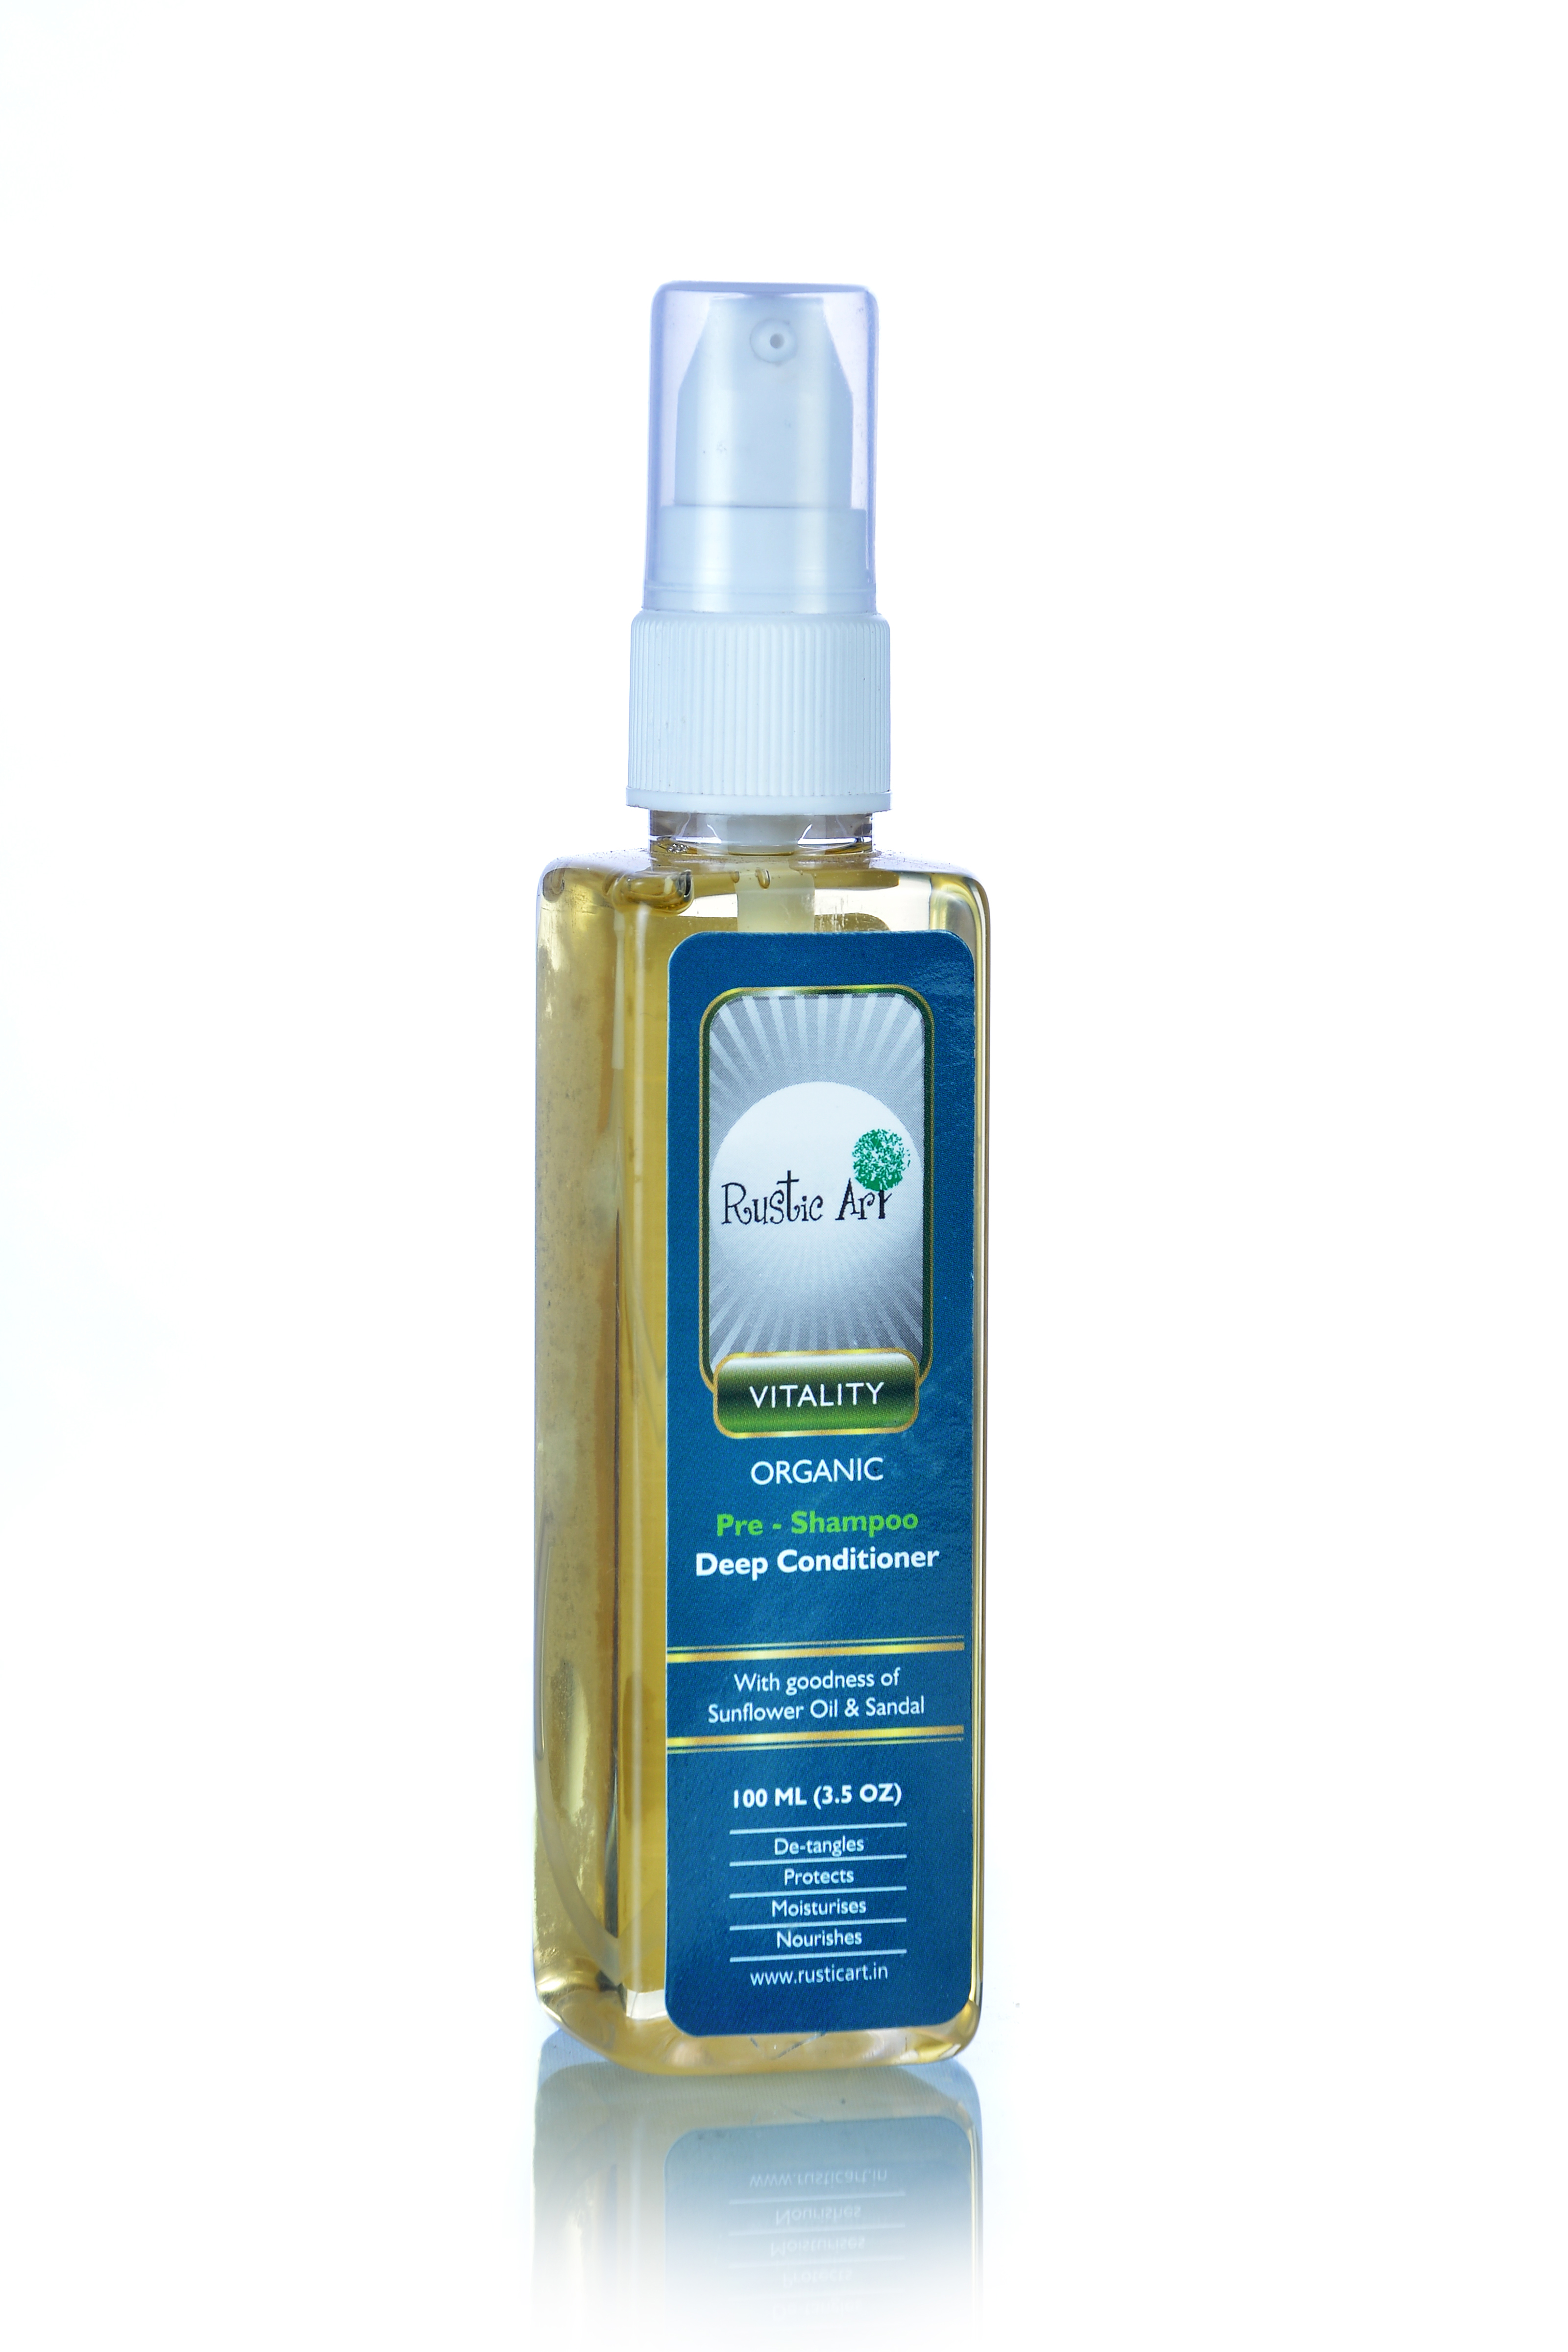 Buy Rustic Art Organic Pre-Shampoo Deep Conditioner at Best Price Online